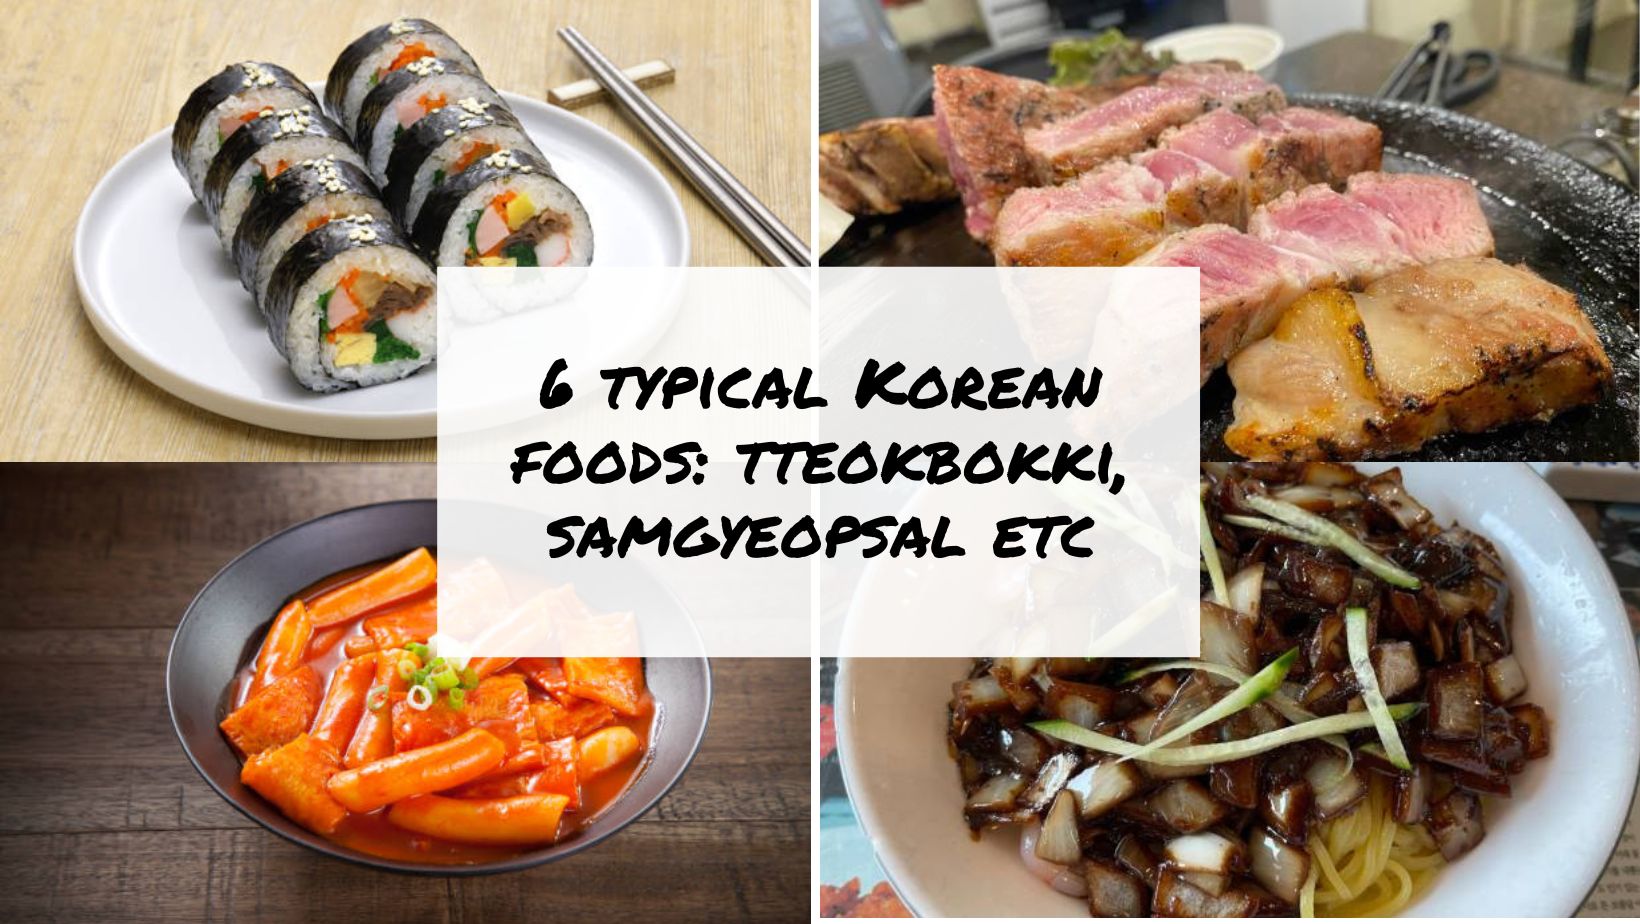 6 typical Korean foods tteokbokki, samgyeopsal etc